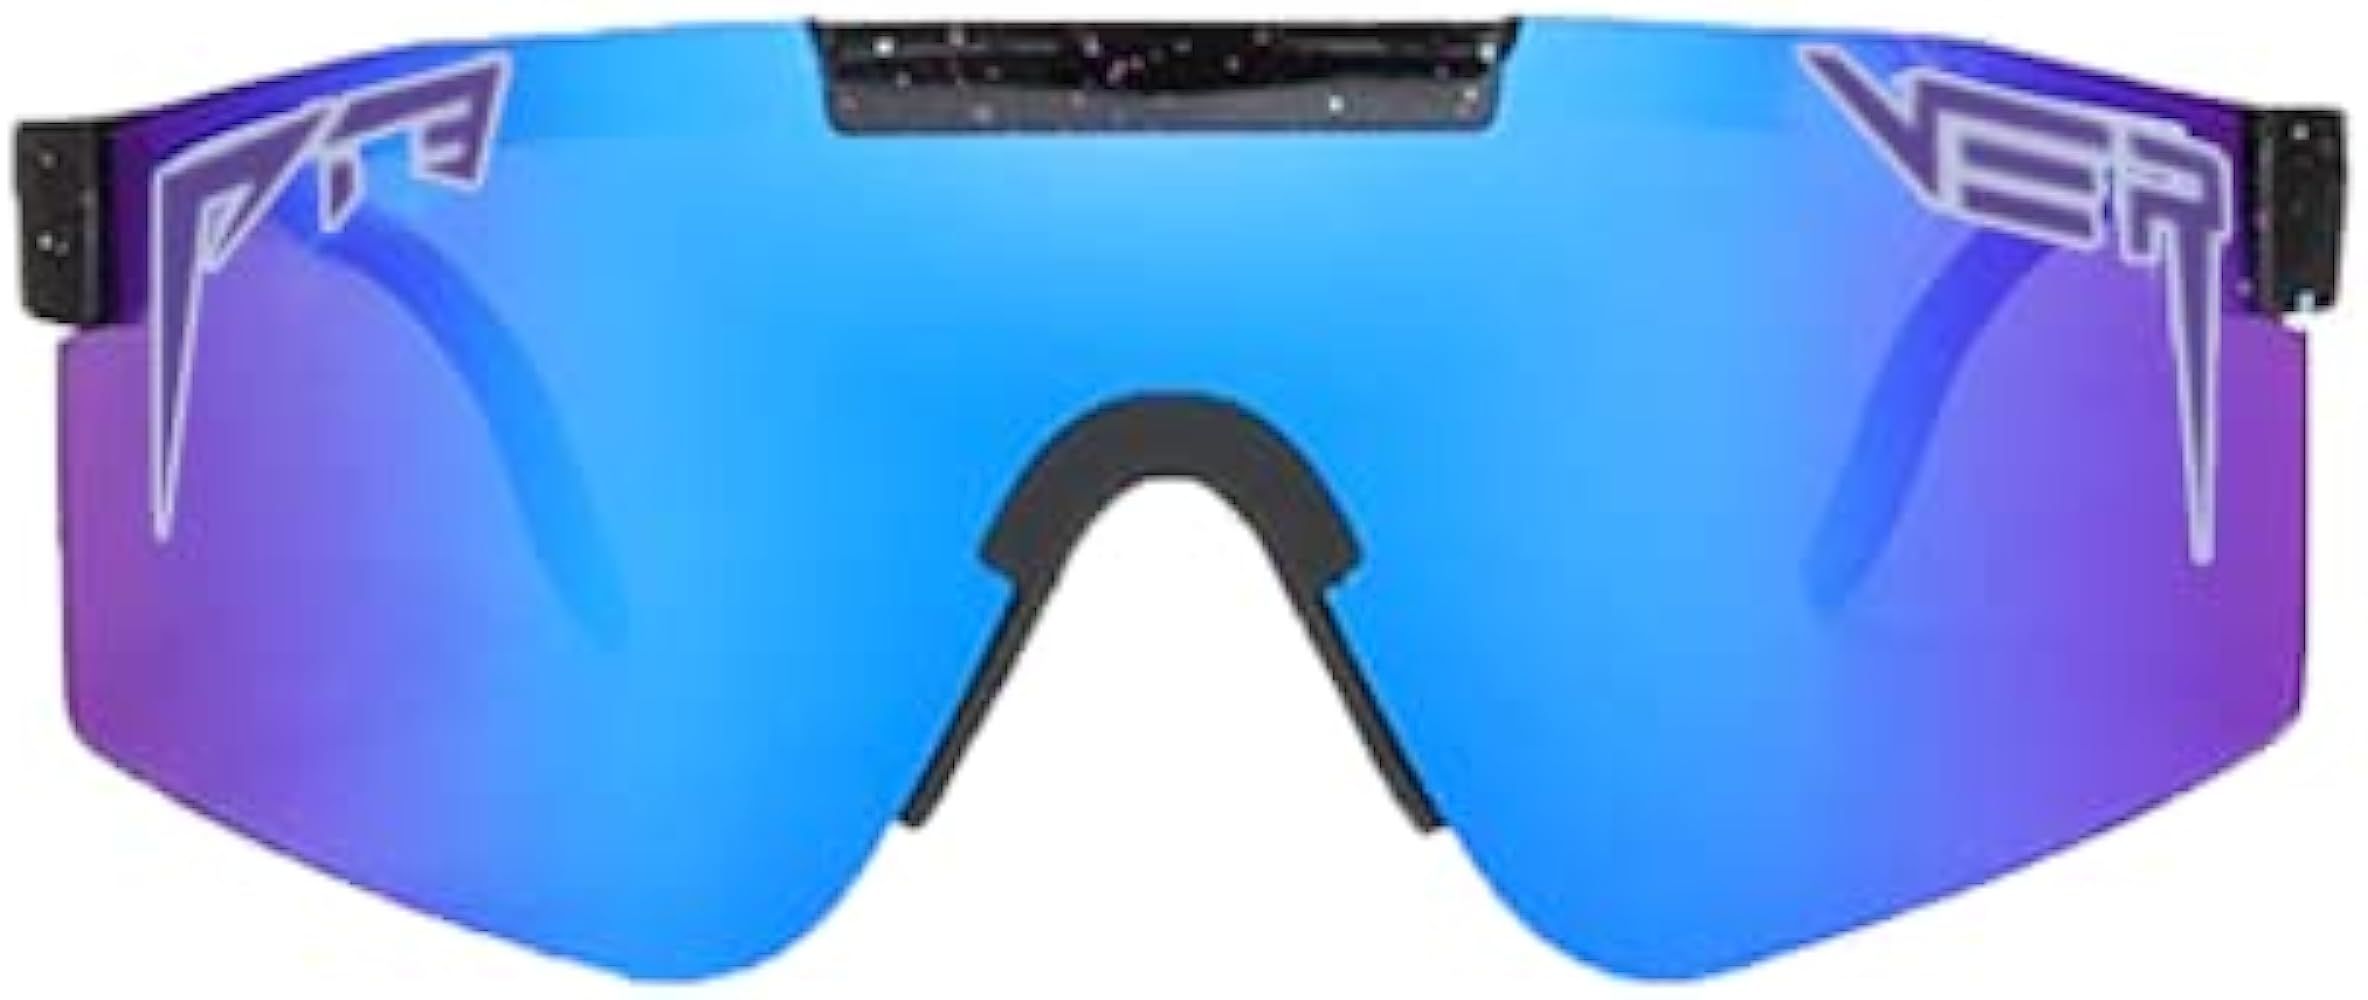 Polarized sunglasses outdoor sports glasses UV400 lens TR90 frame men and women | Amazon (US)